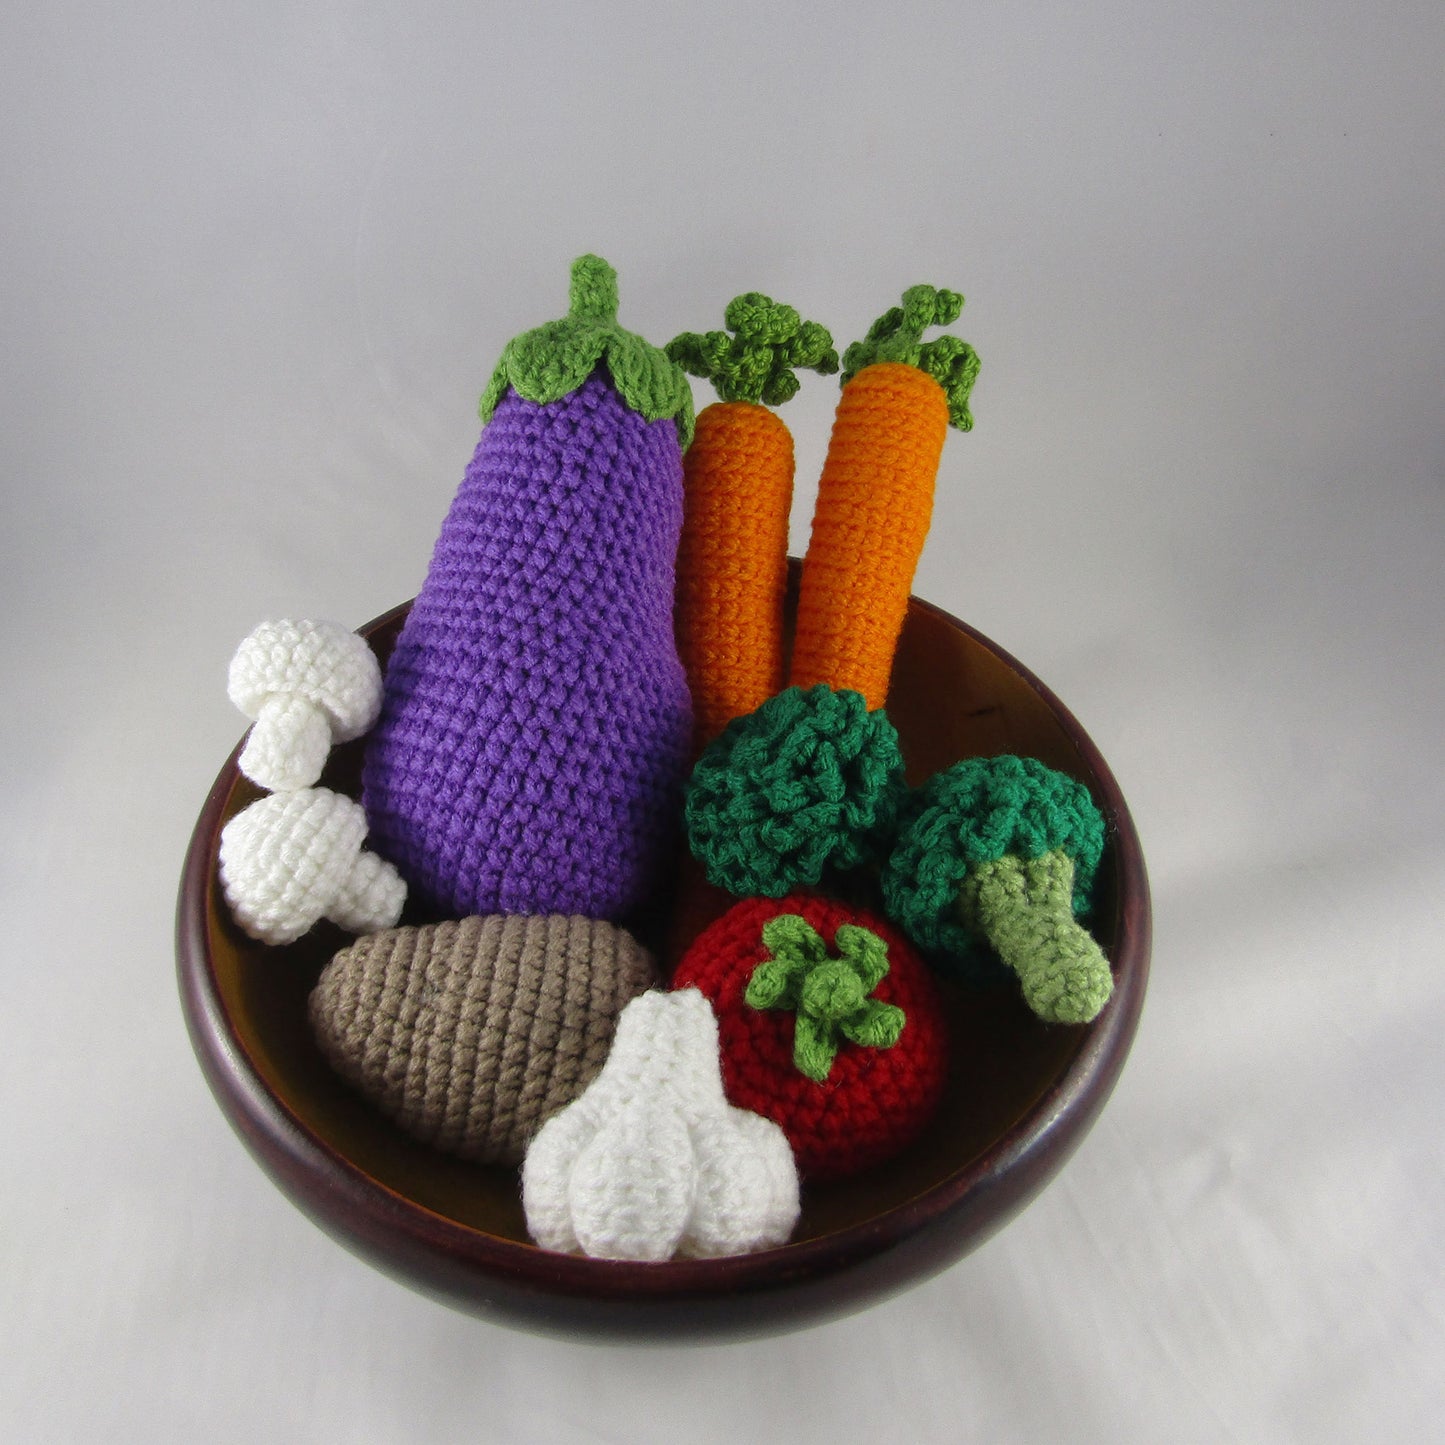 Potato Crochet Pattern + Coloring Page